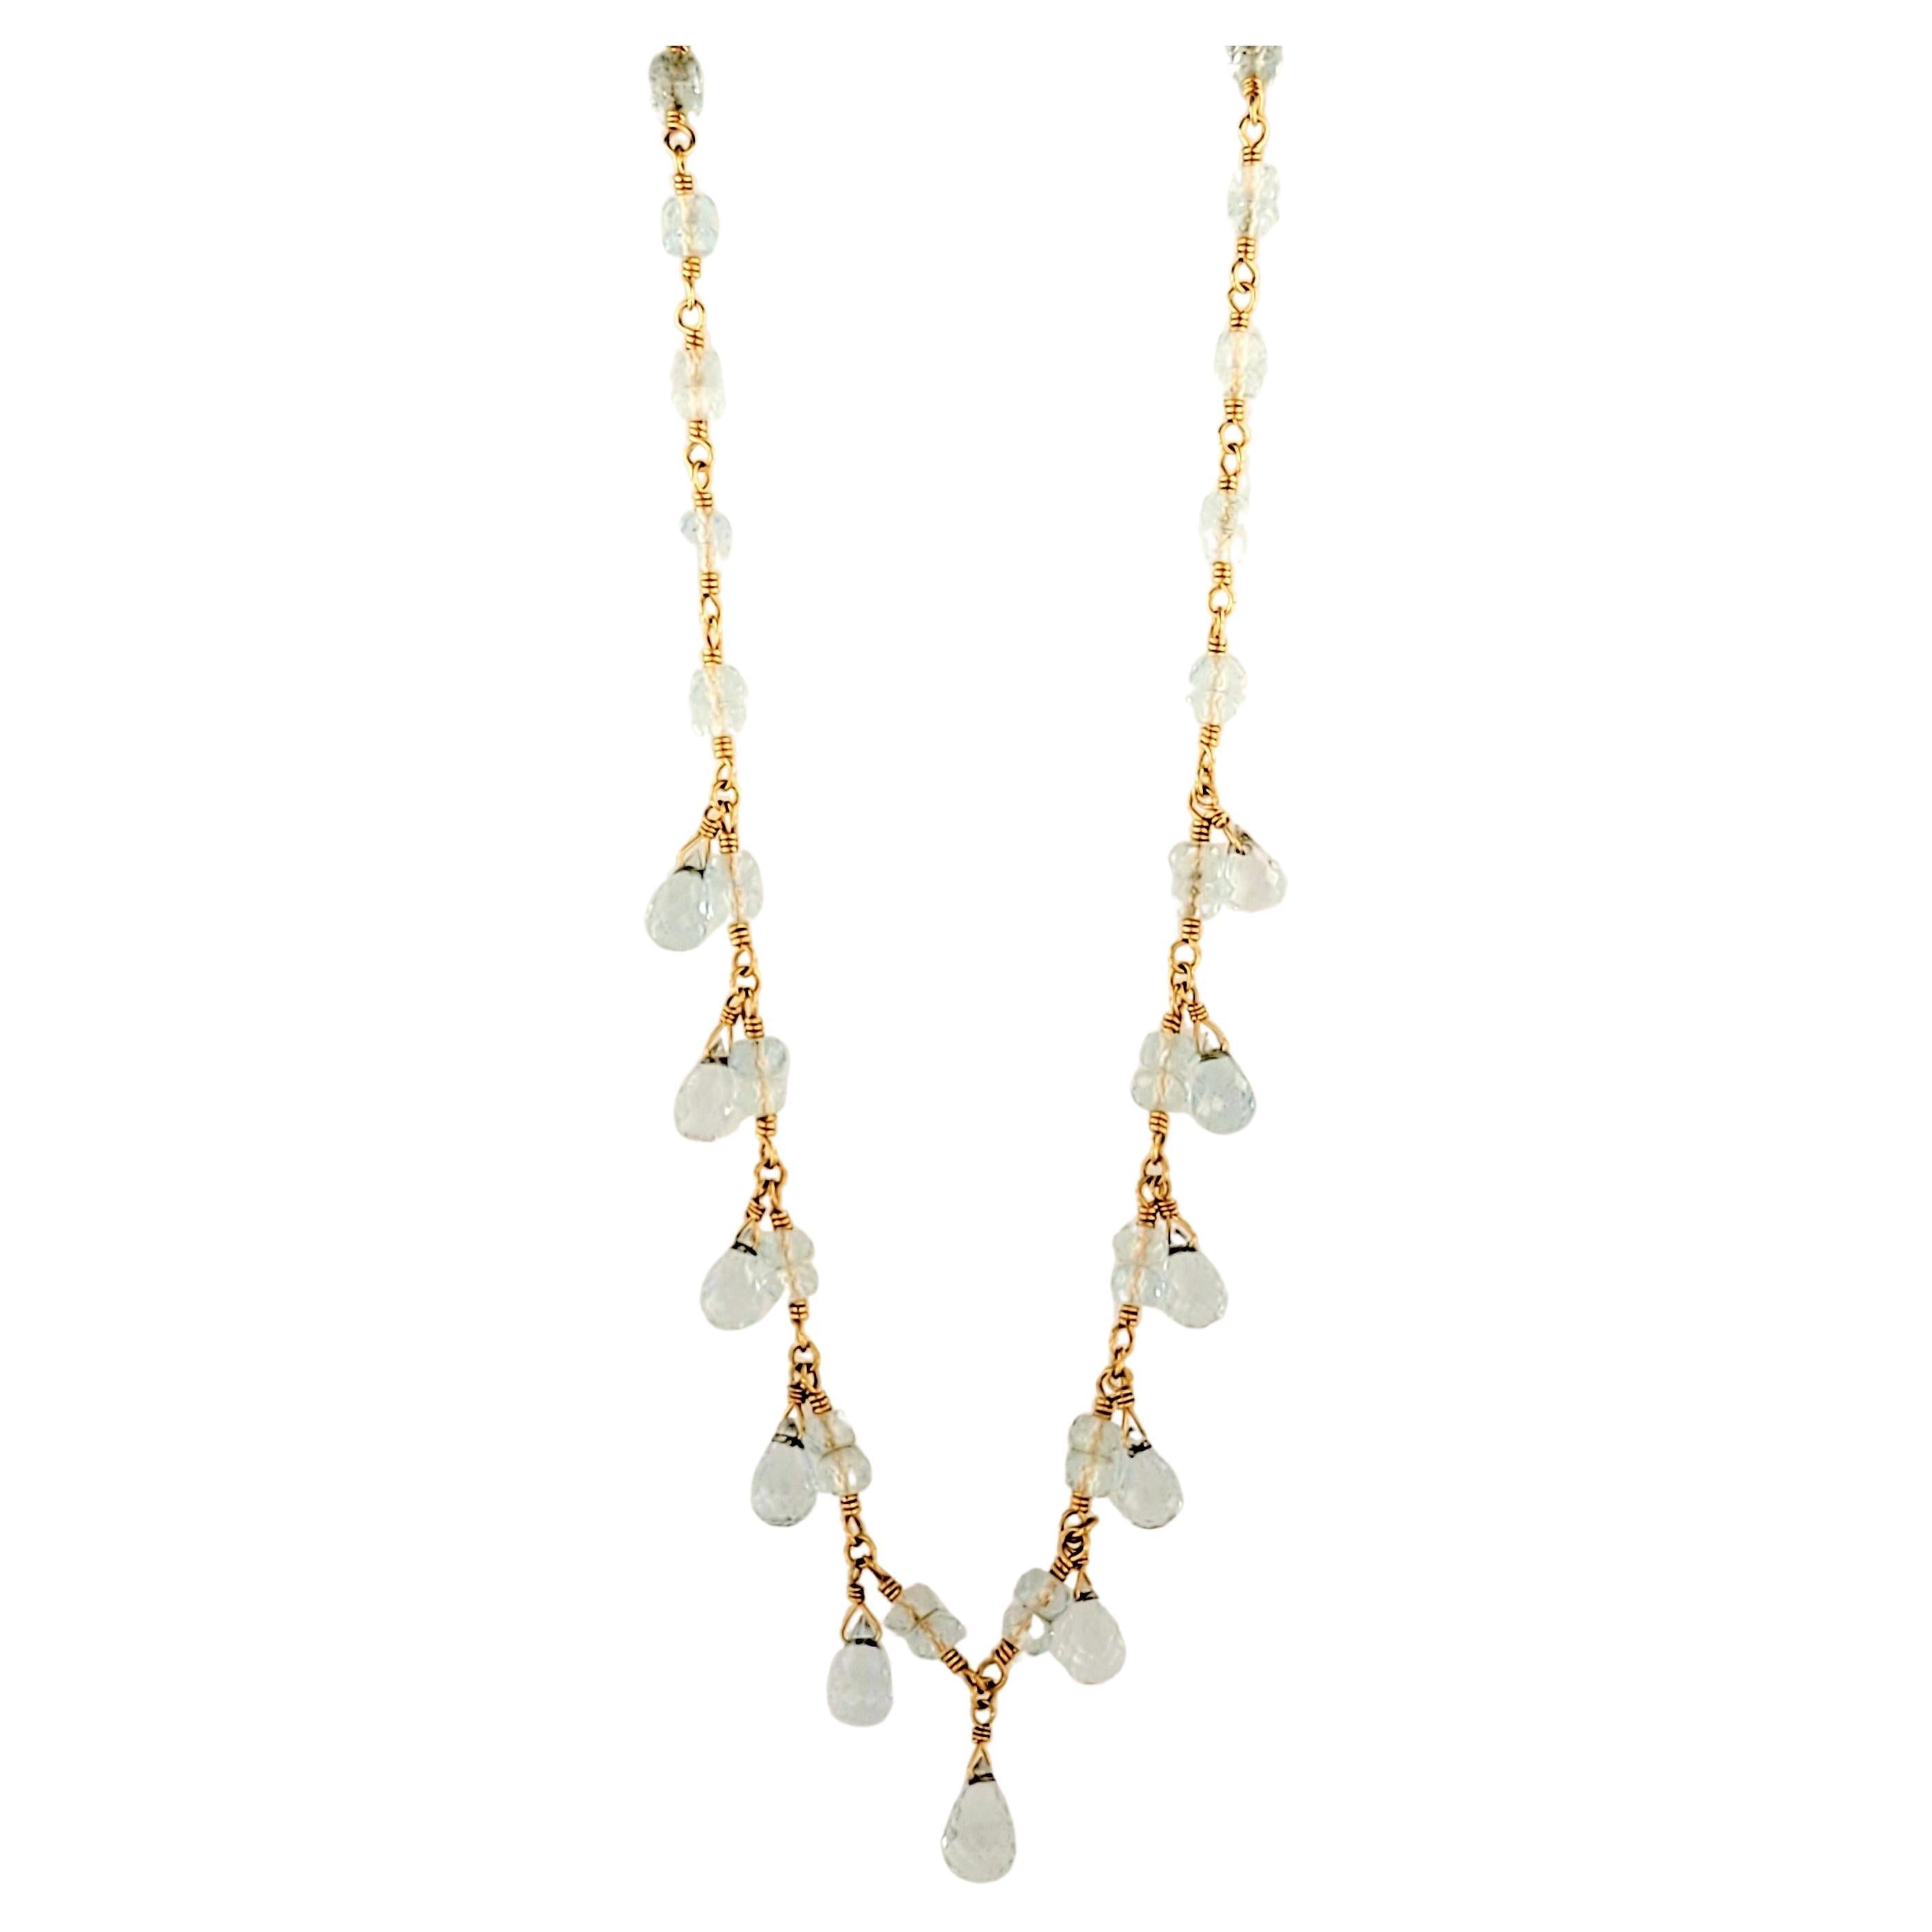 RARE collier vintage Tiffany & Co. 18k aigue-marine briolette pierre précieuse en vente